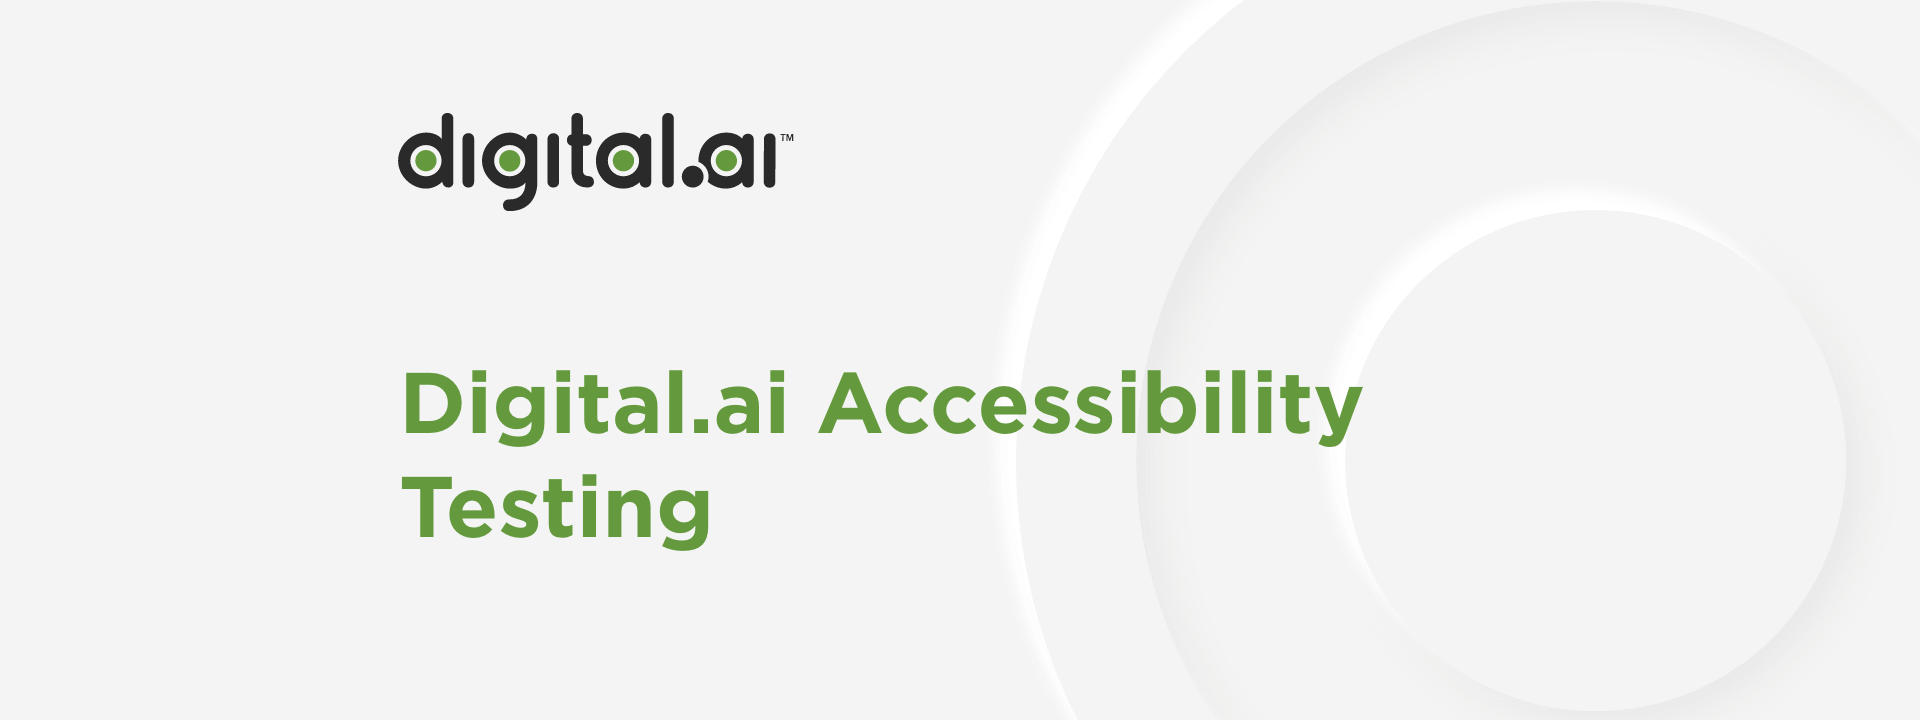 Digital.ai-Accessibility-Testing